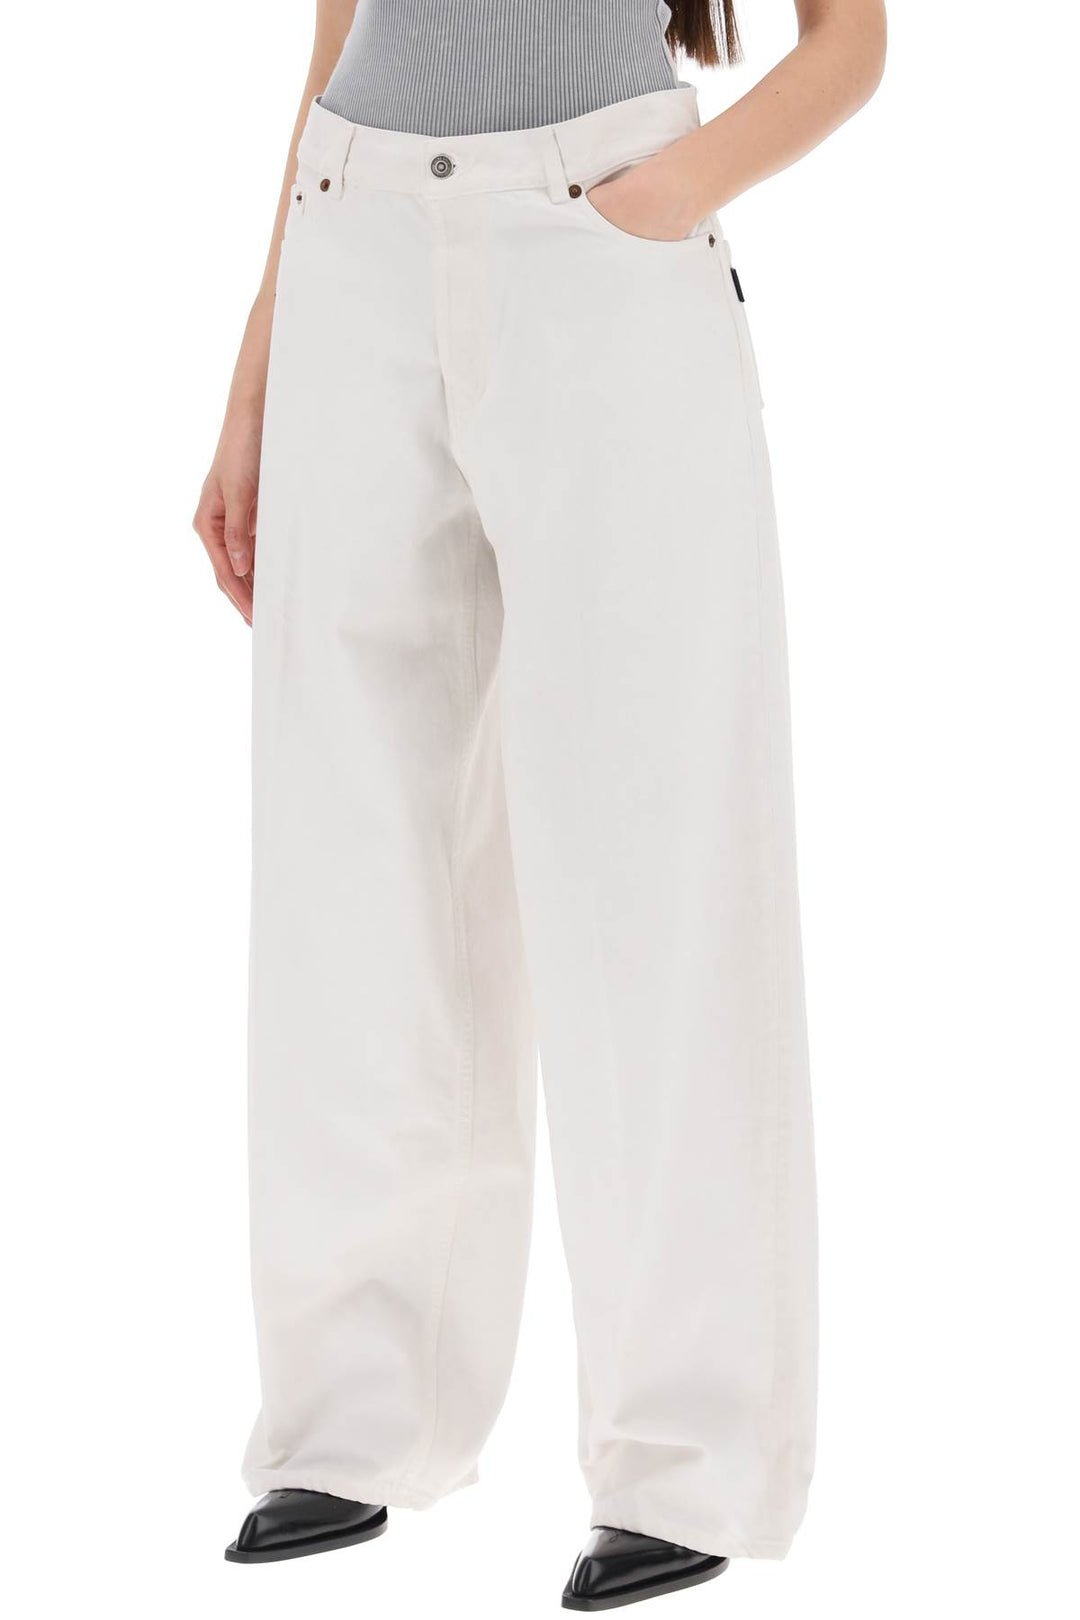 Haikure Bethany Napoli Jeans Collection   White